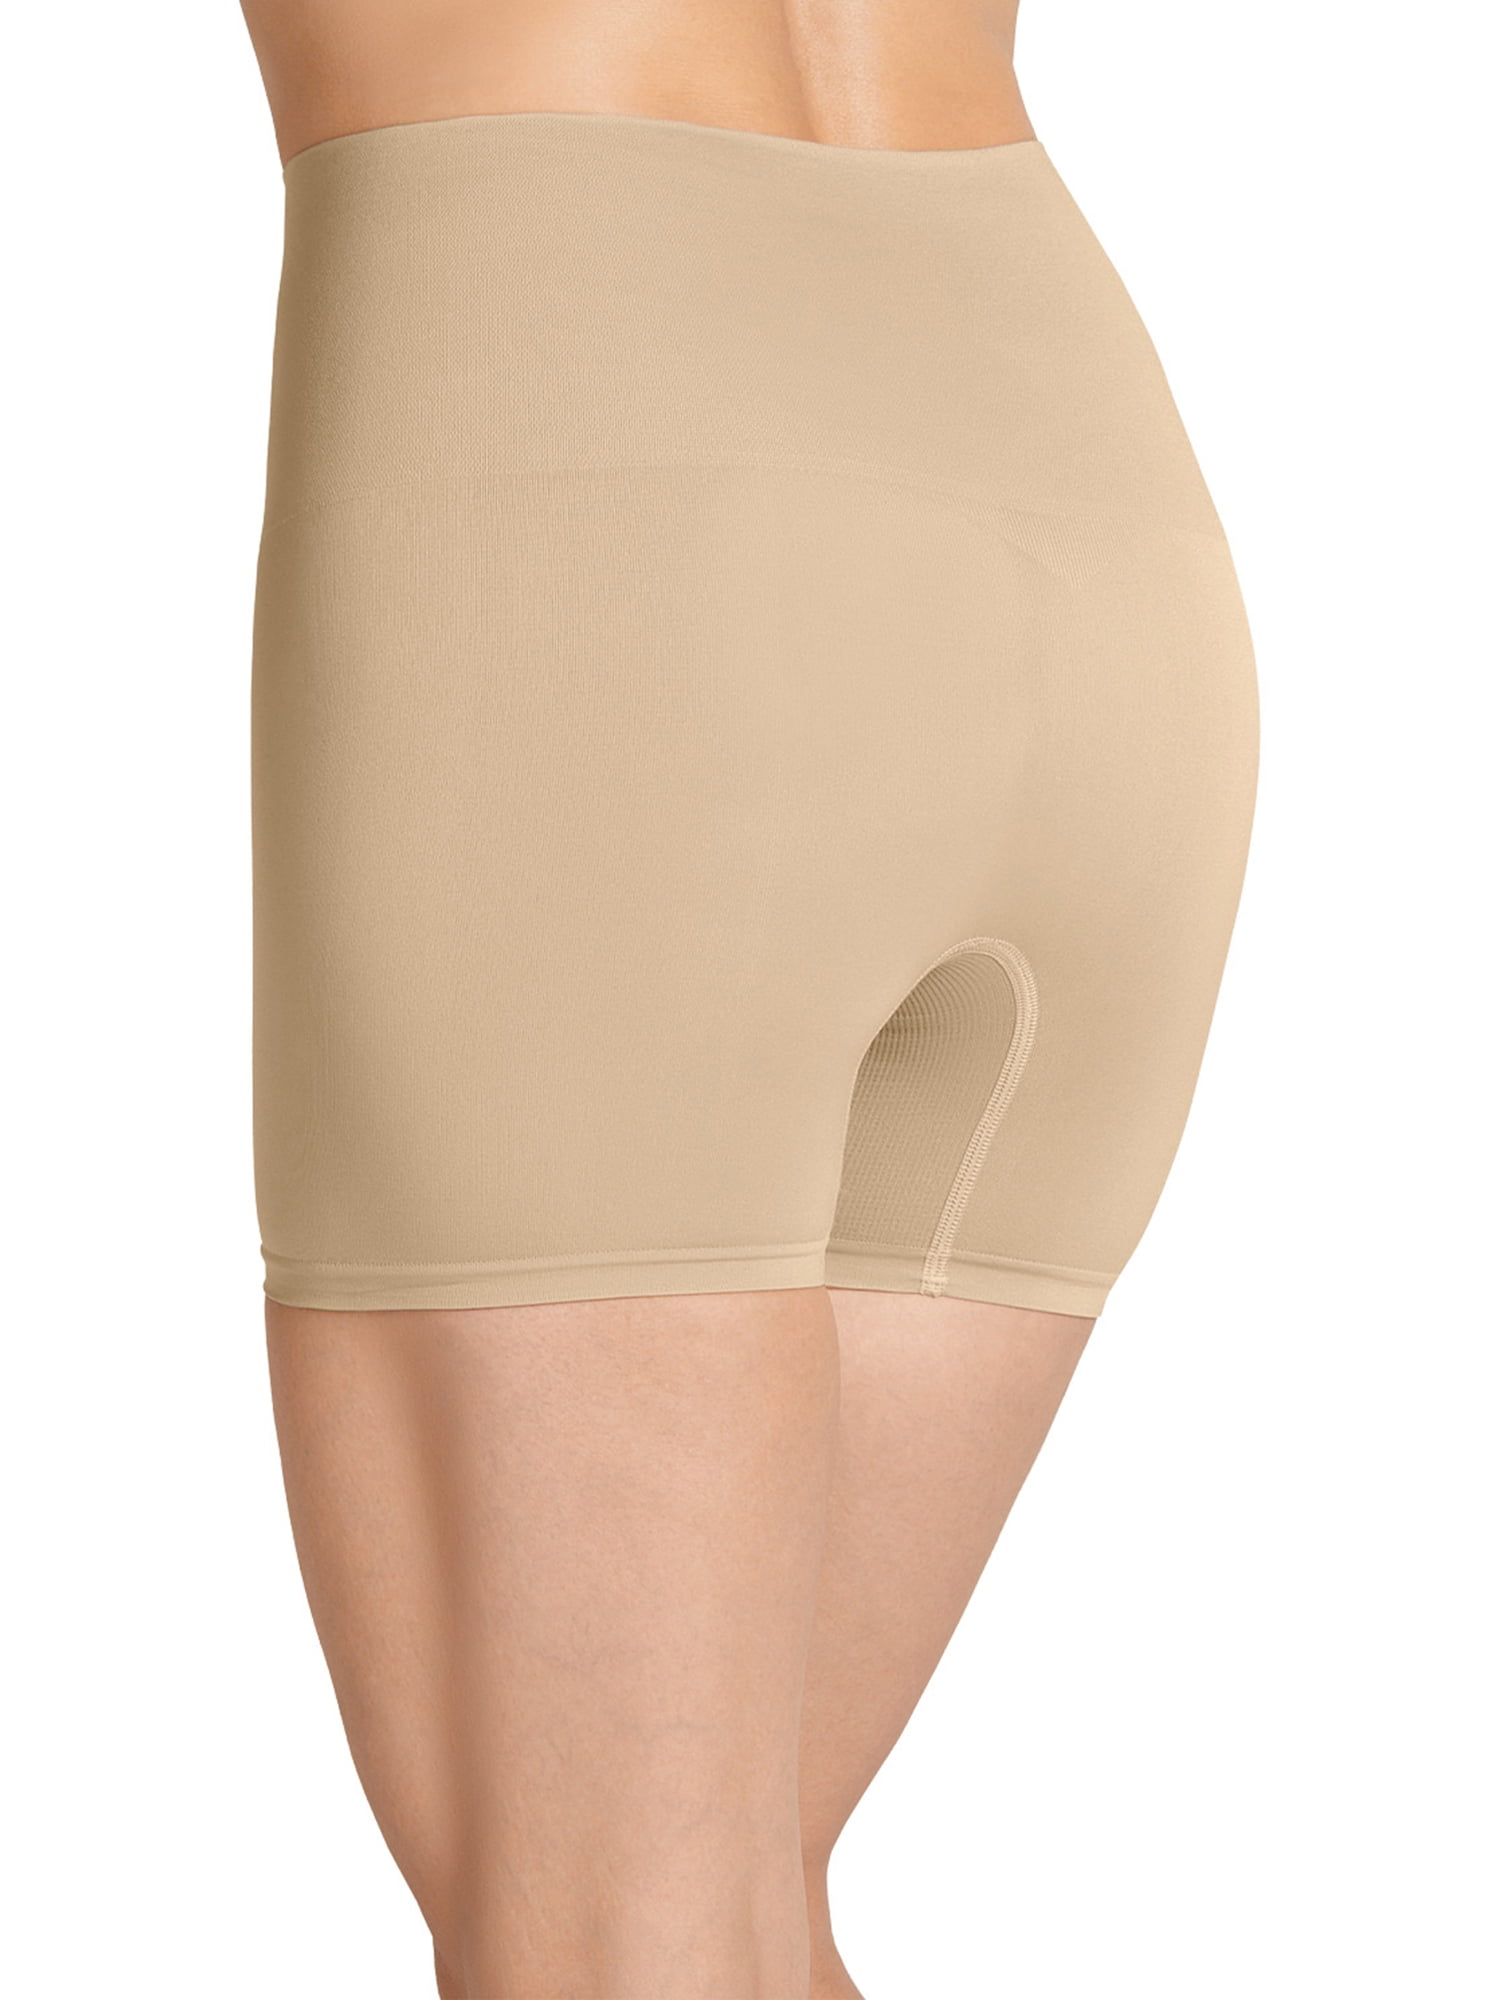 Jockey Essentials Women's Seamfree Slimming Short, Cooling Shapewear, Body  Slimming Slipshort, Sizes Small-3XL, 5359 